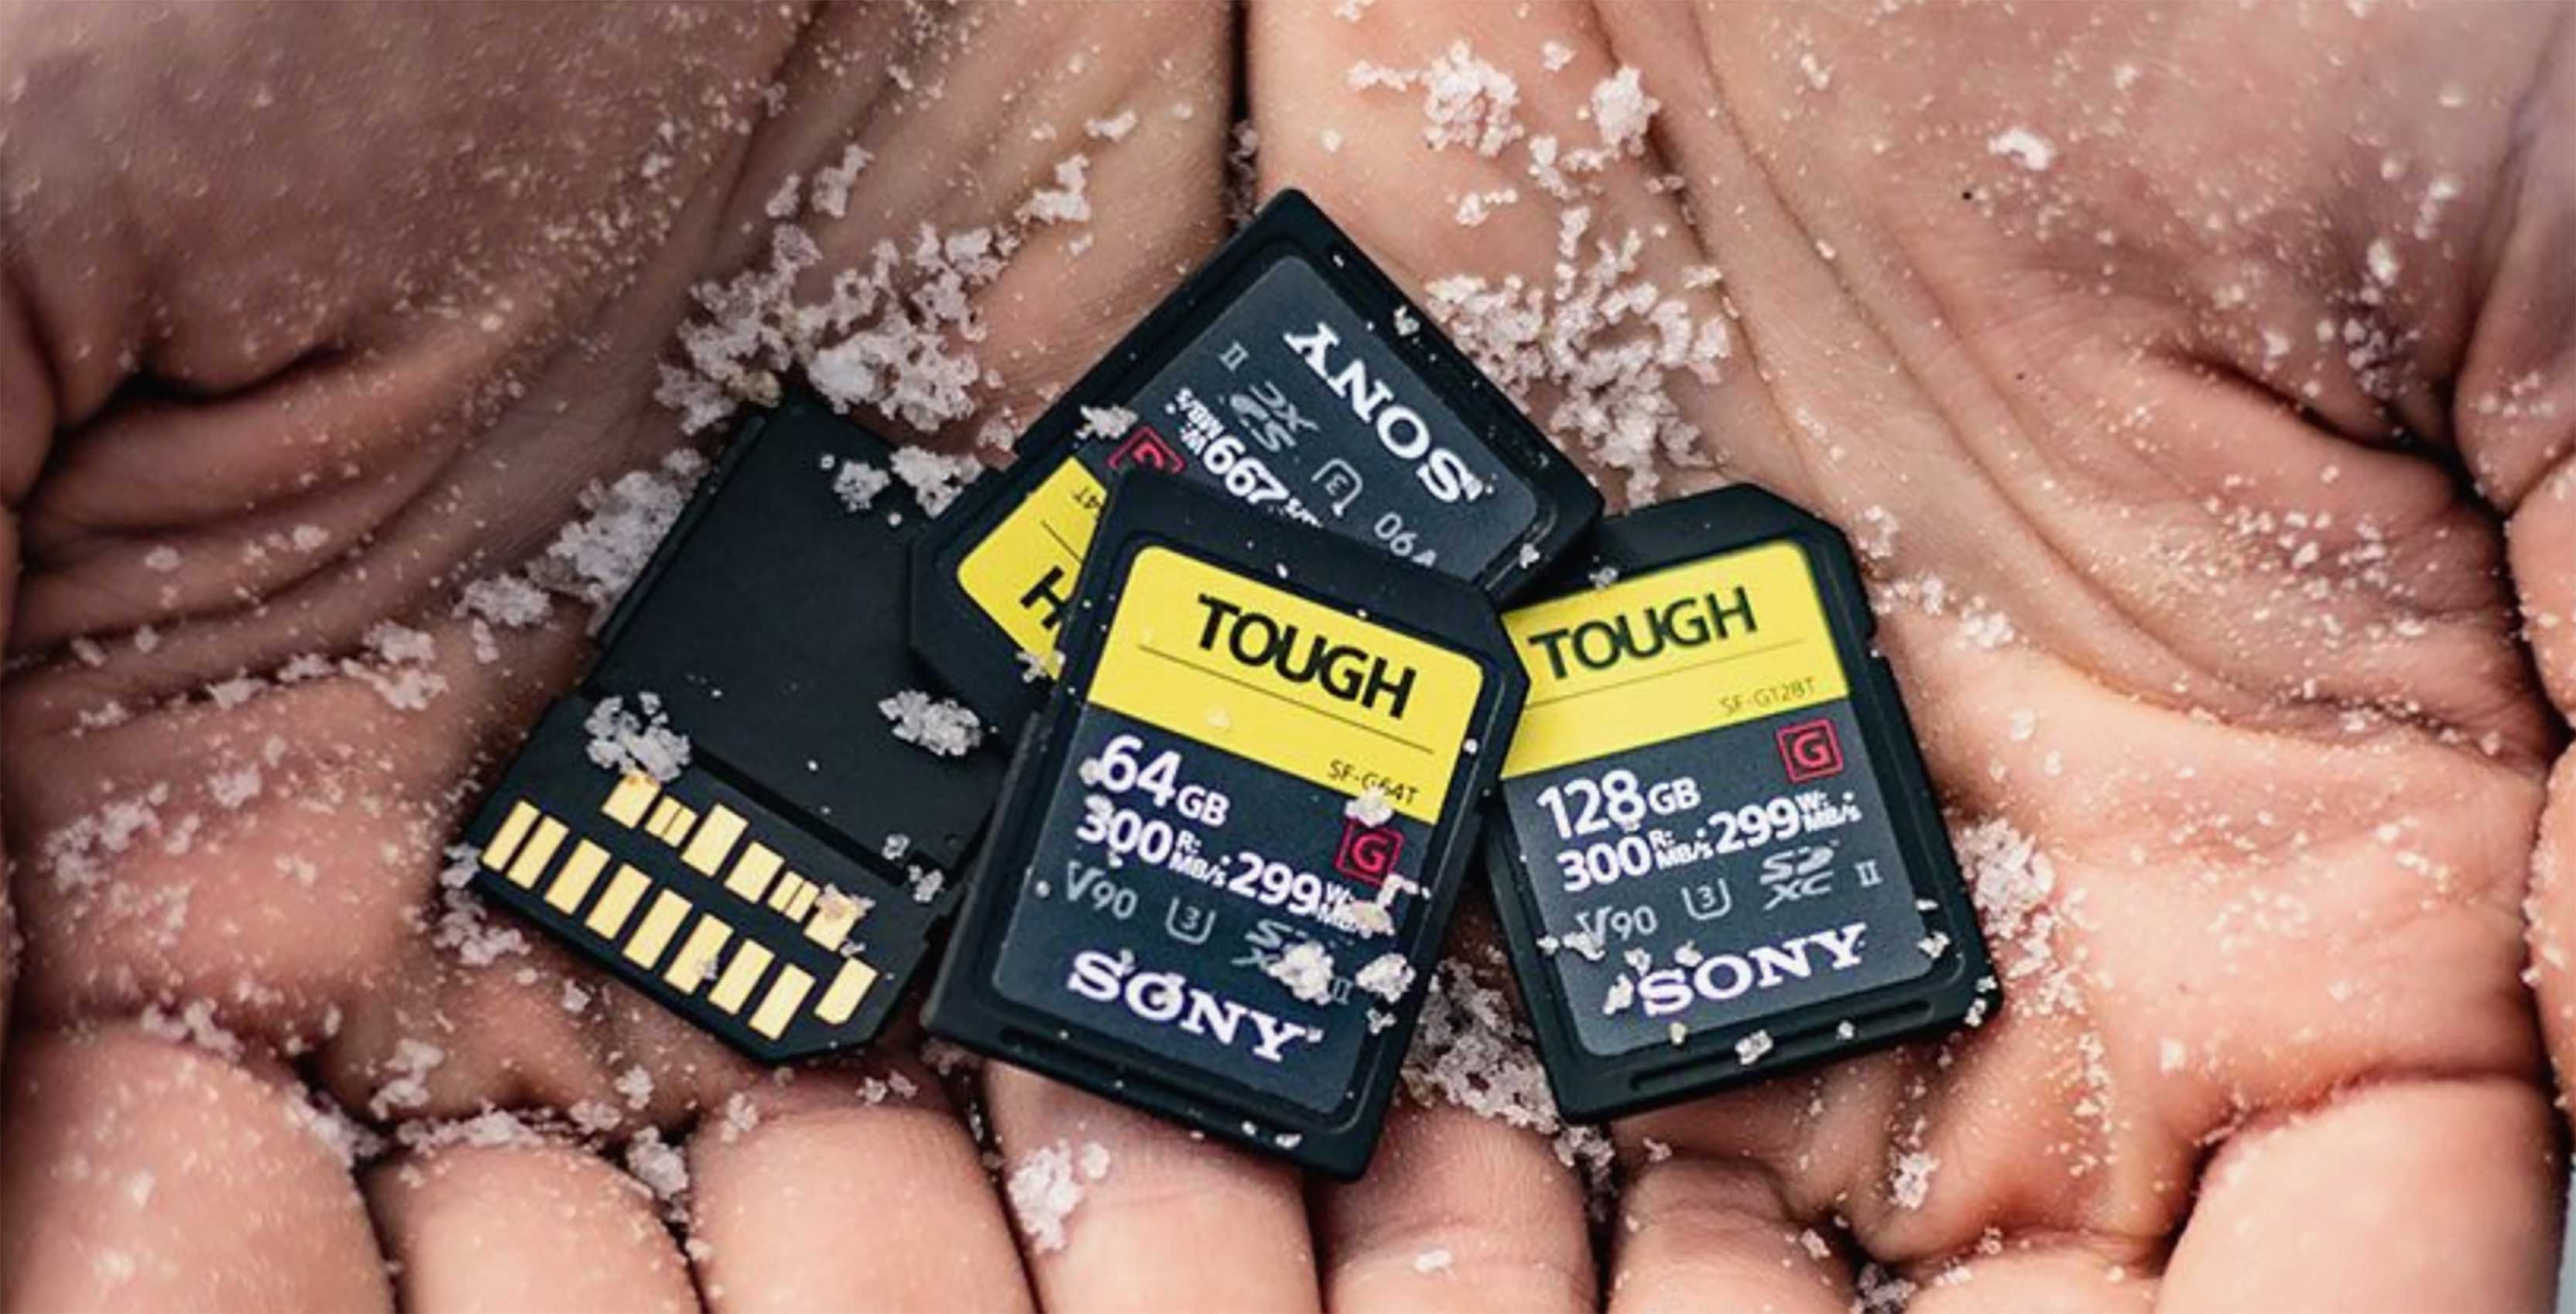 Sony Tough SD cards